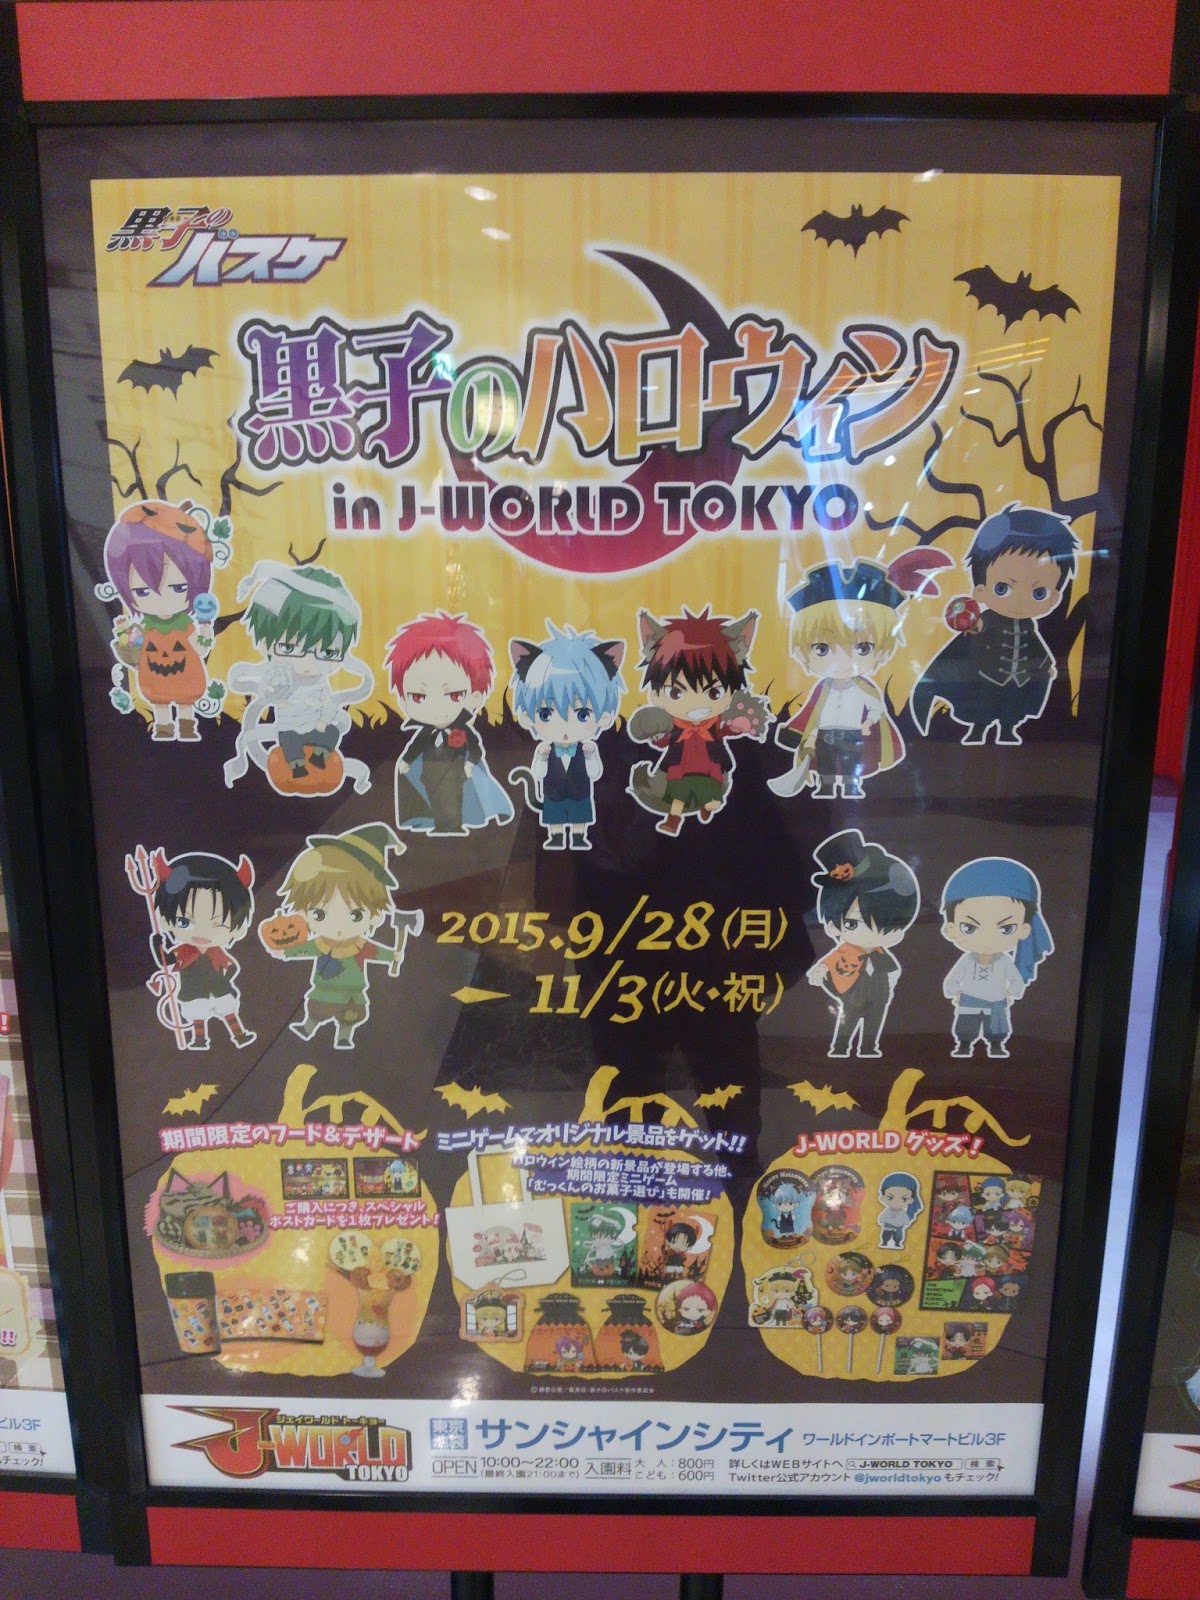 Japan Life Proxy Service Kuroko No Basket Halloween In J World Tokyo From 28th Sep To 3th Nov